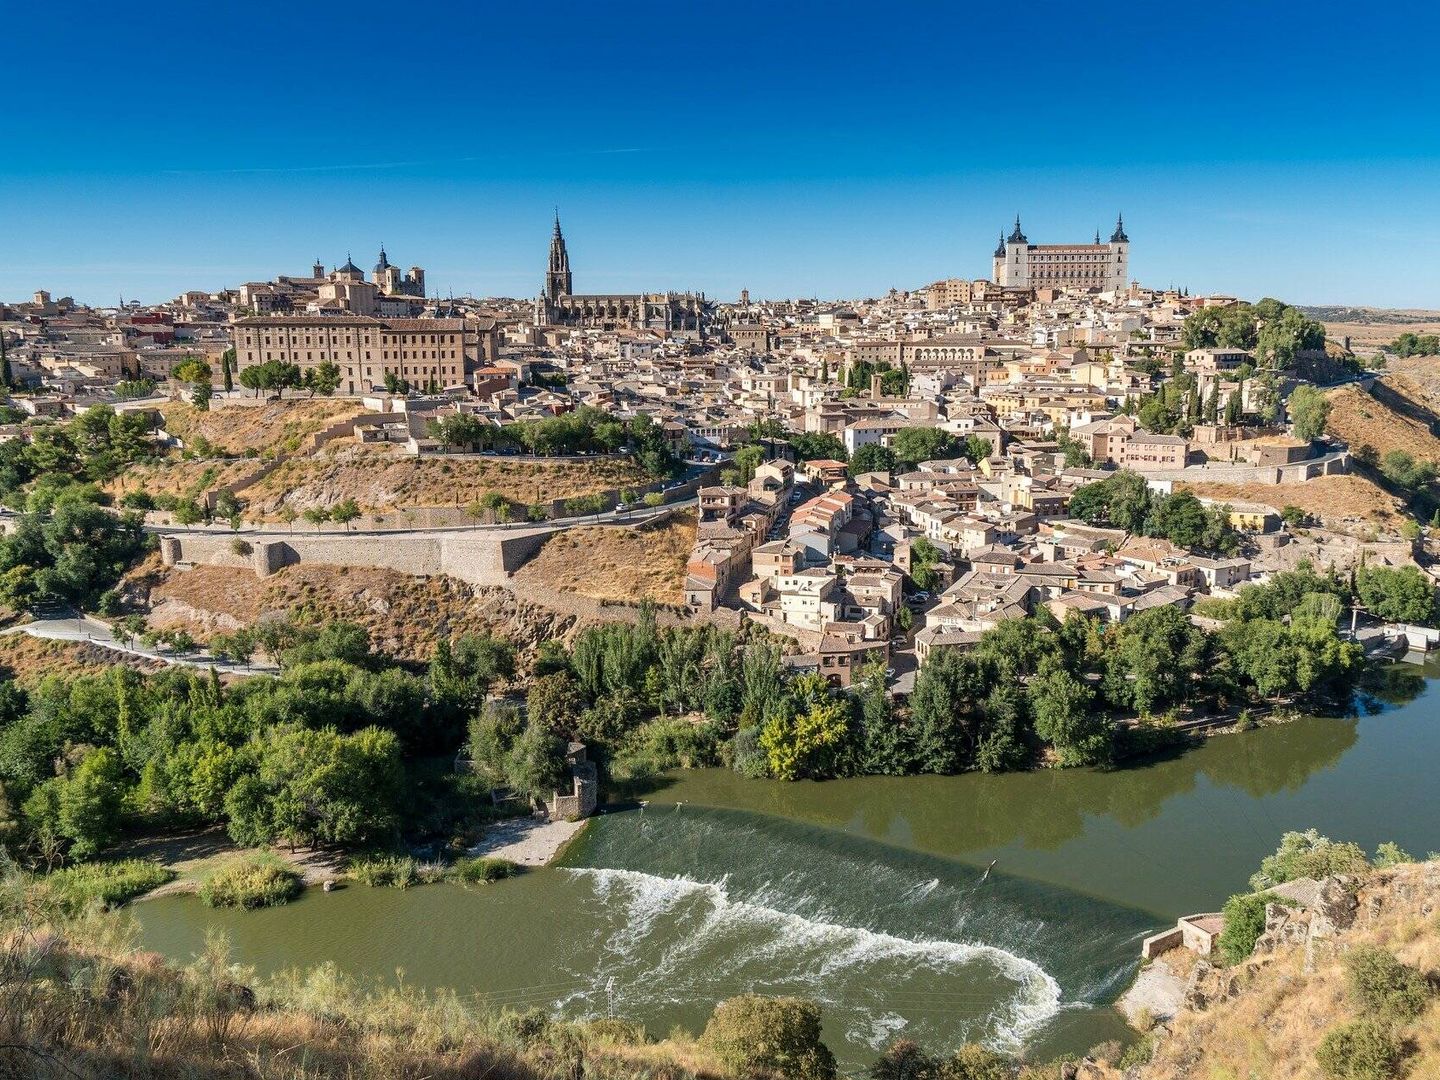 Toledo. (Pixabay)